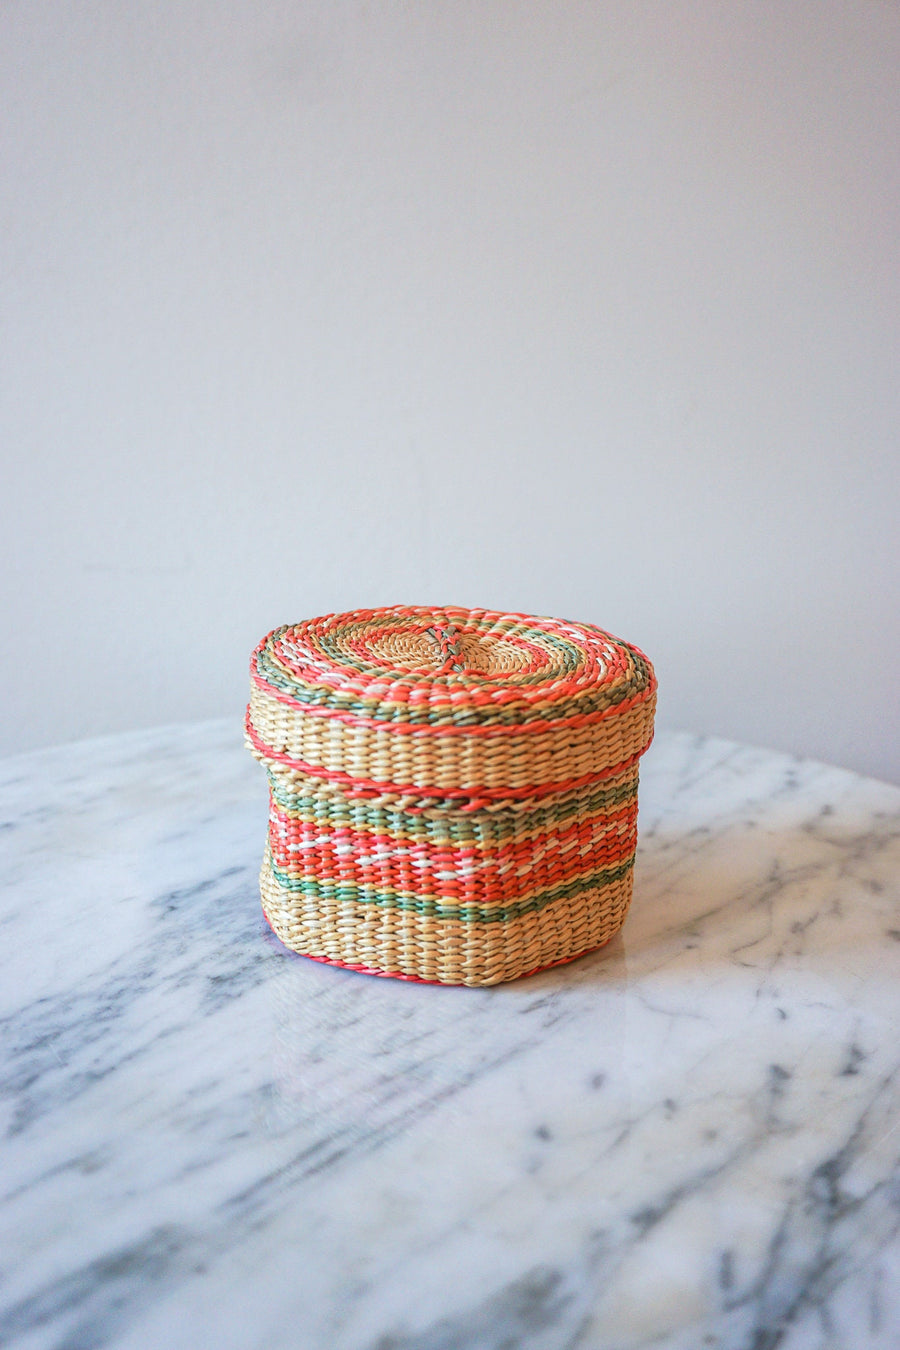 Colorful Mini Woven Hexagon Basket with Original Lid